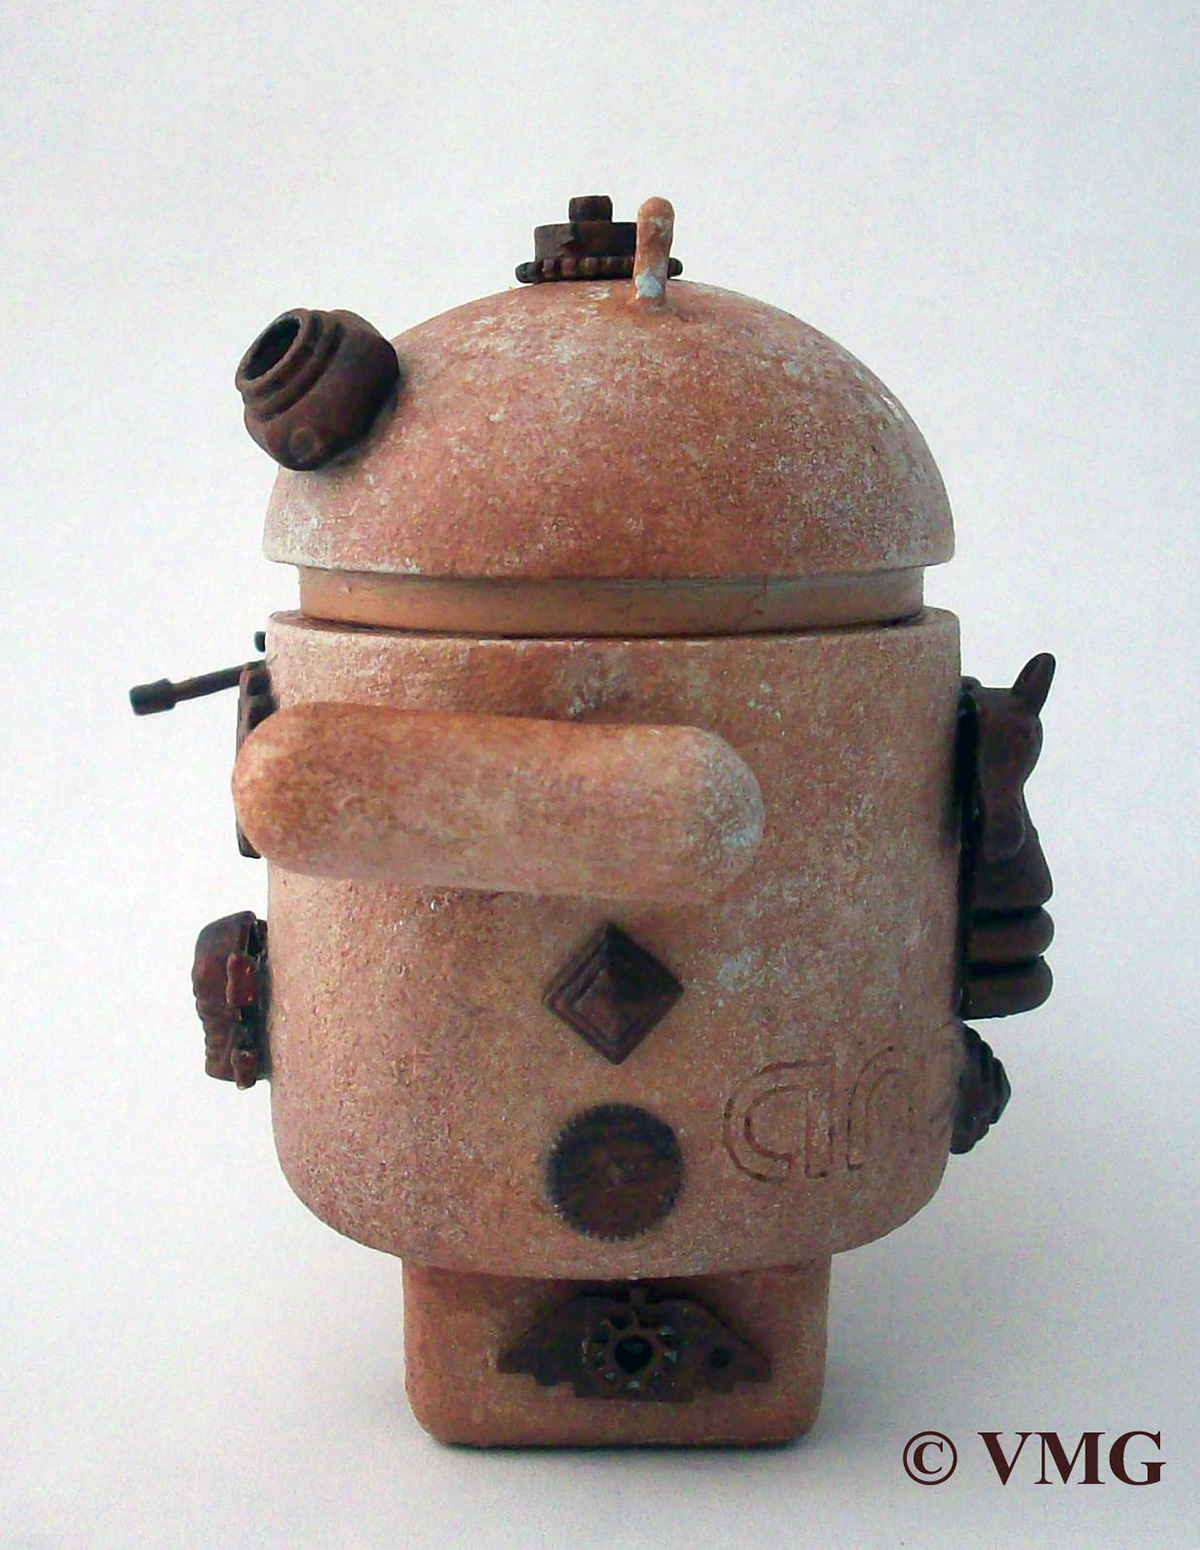 Androids  steampunk  dyzplastic  Andrew Bell  custom  urban  vinyl  art  toys